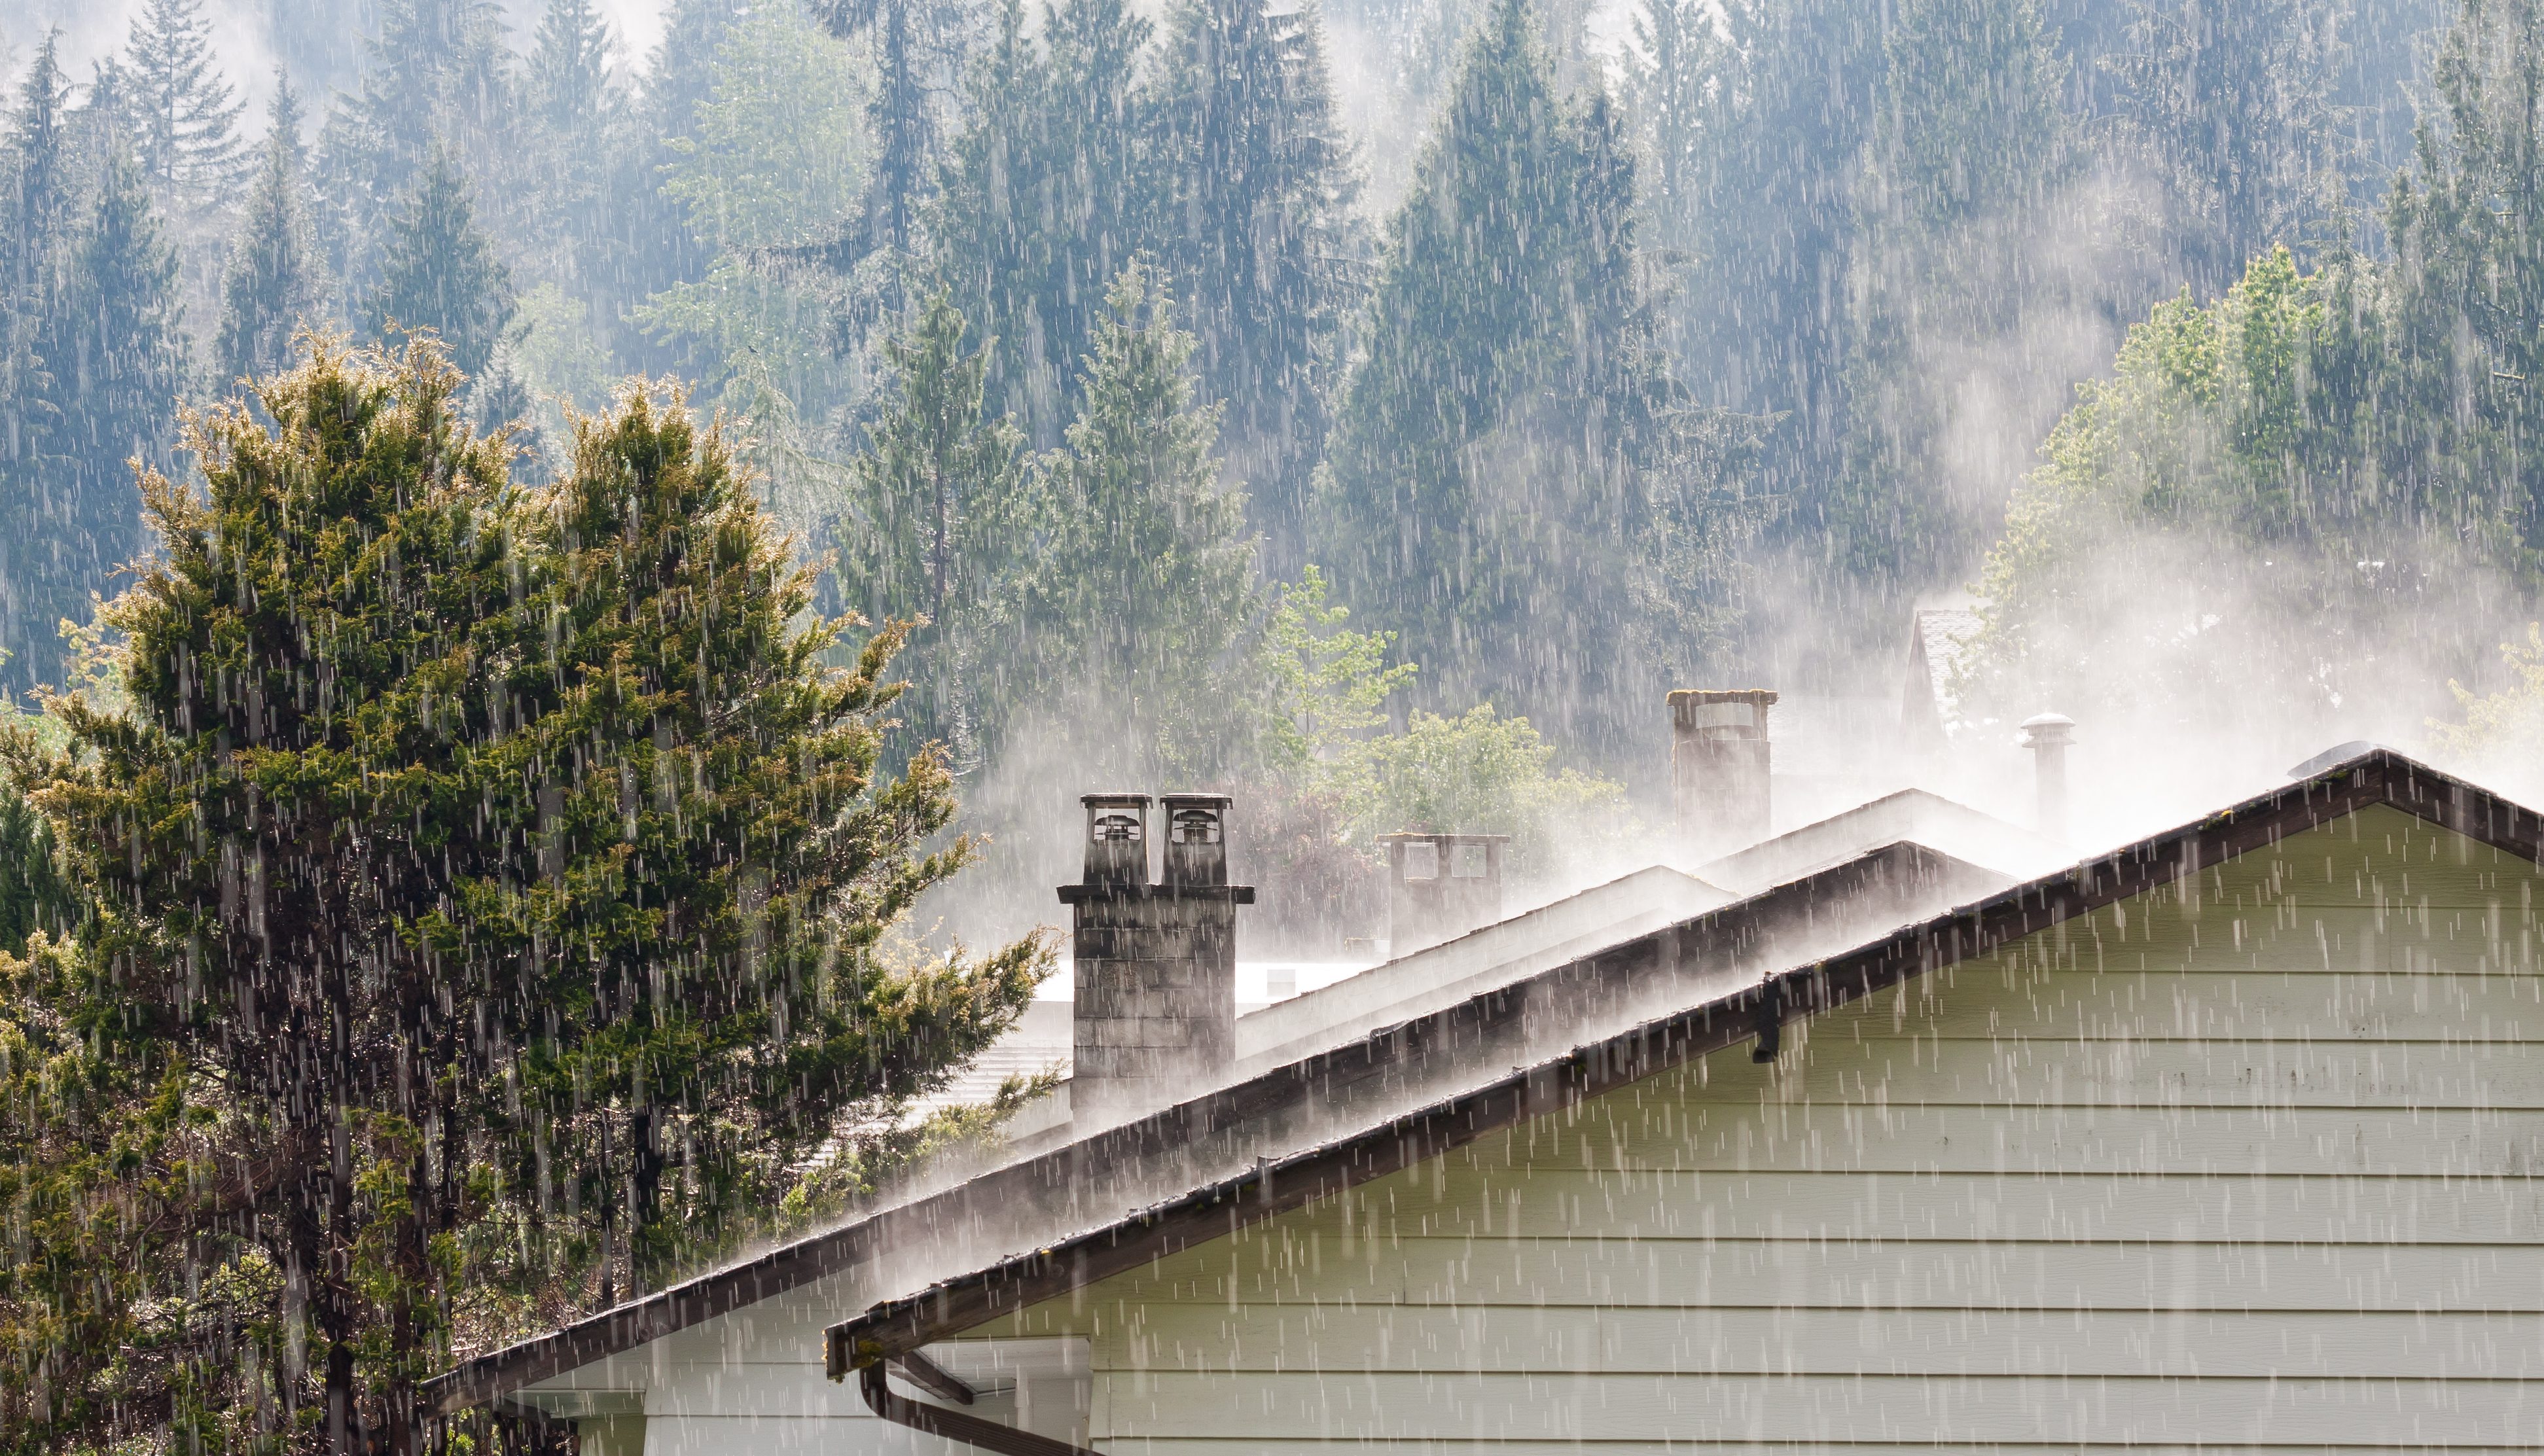 Rainfall on suburban rooftops.